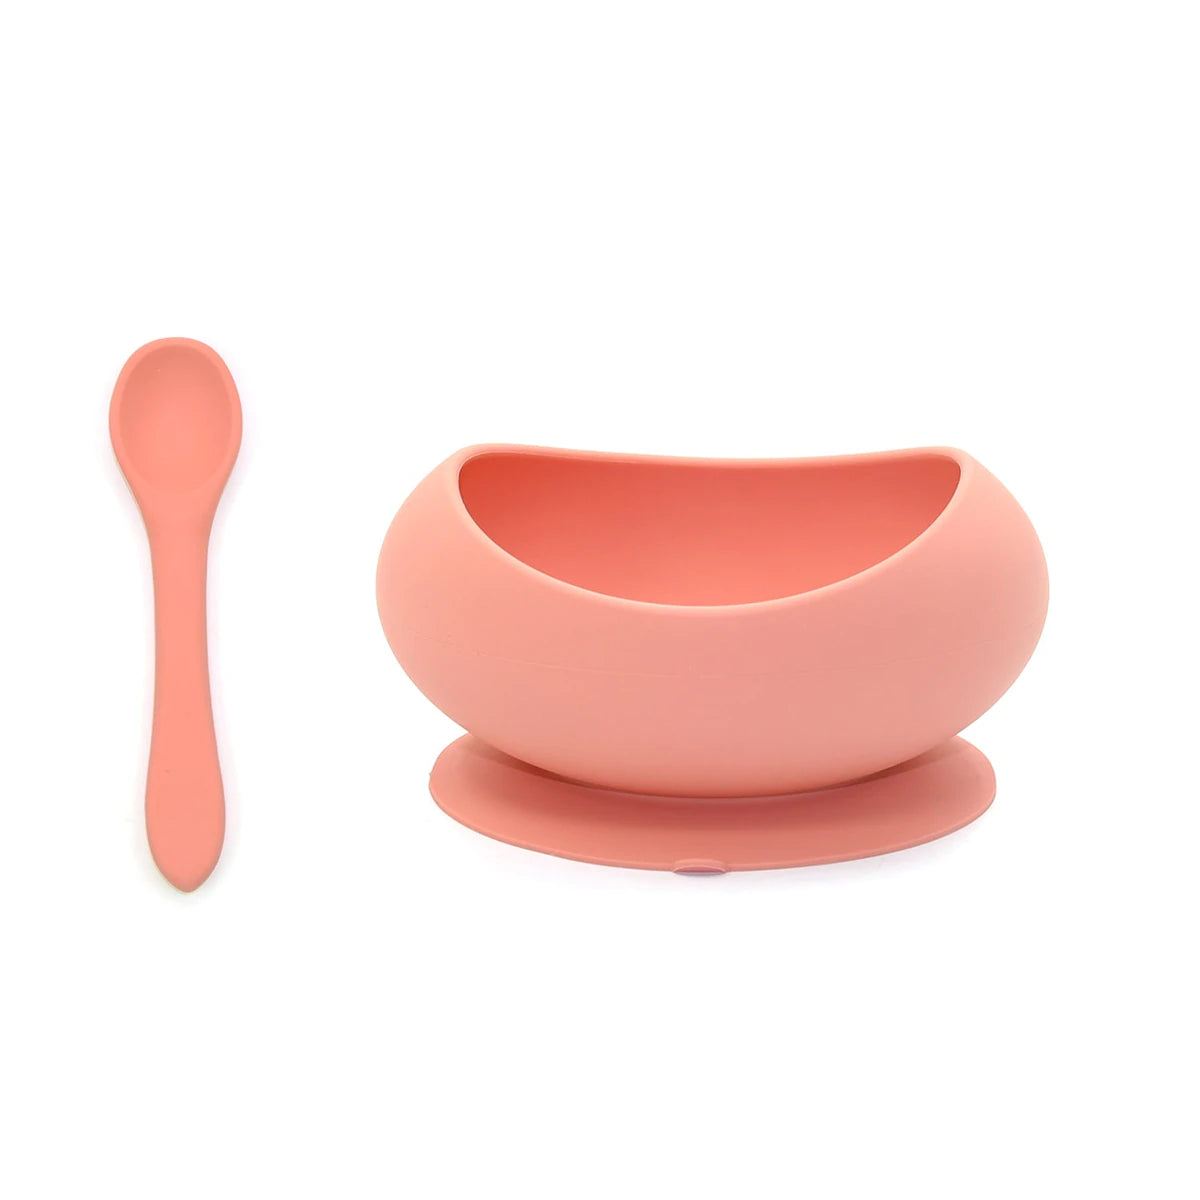 O.B Design | Silicone Suction Bowl & Spoon Set